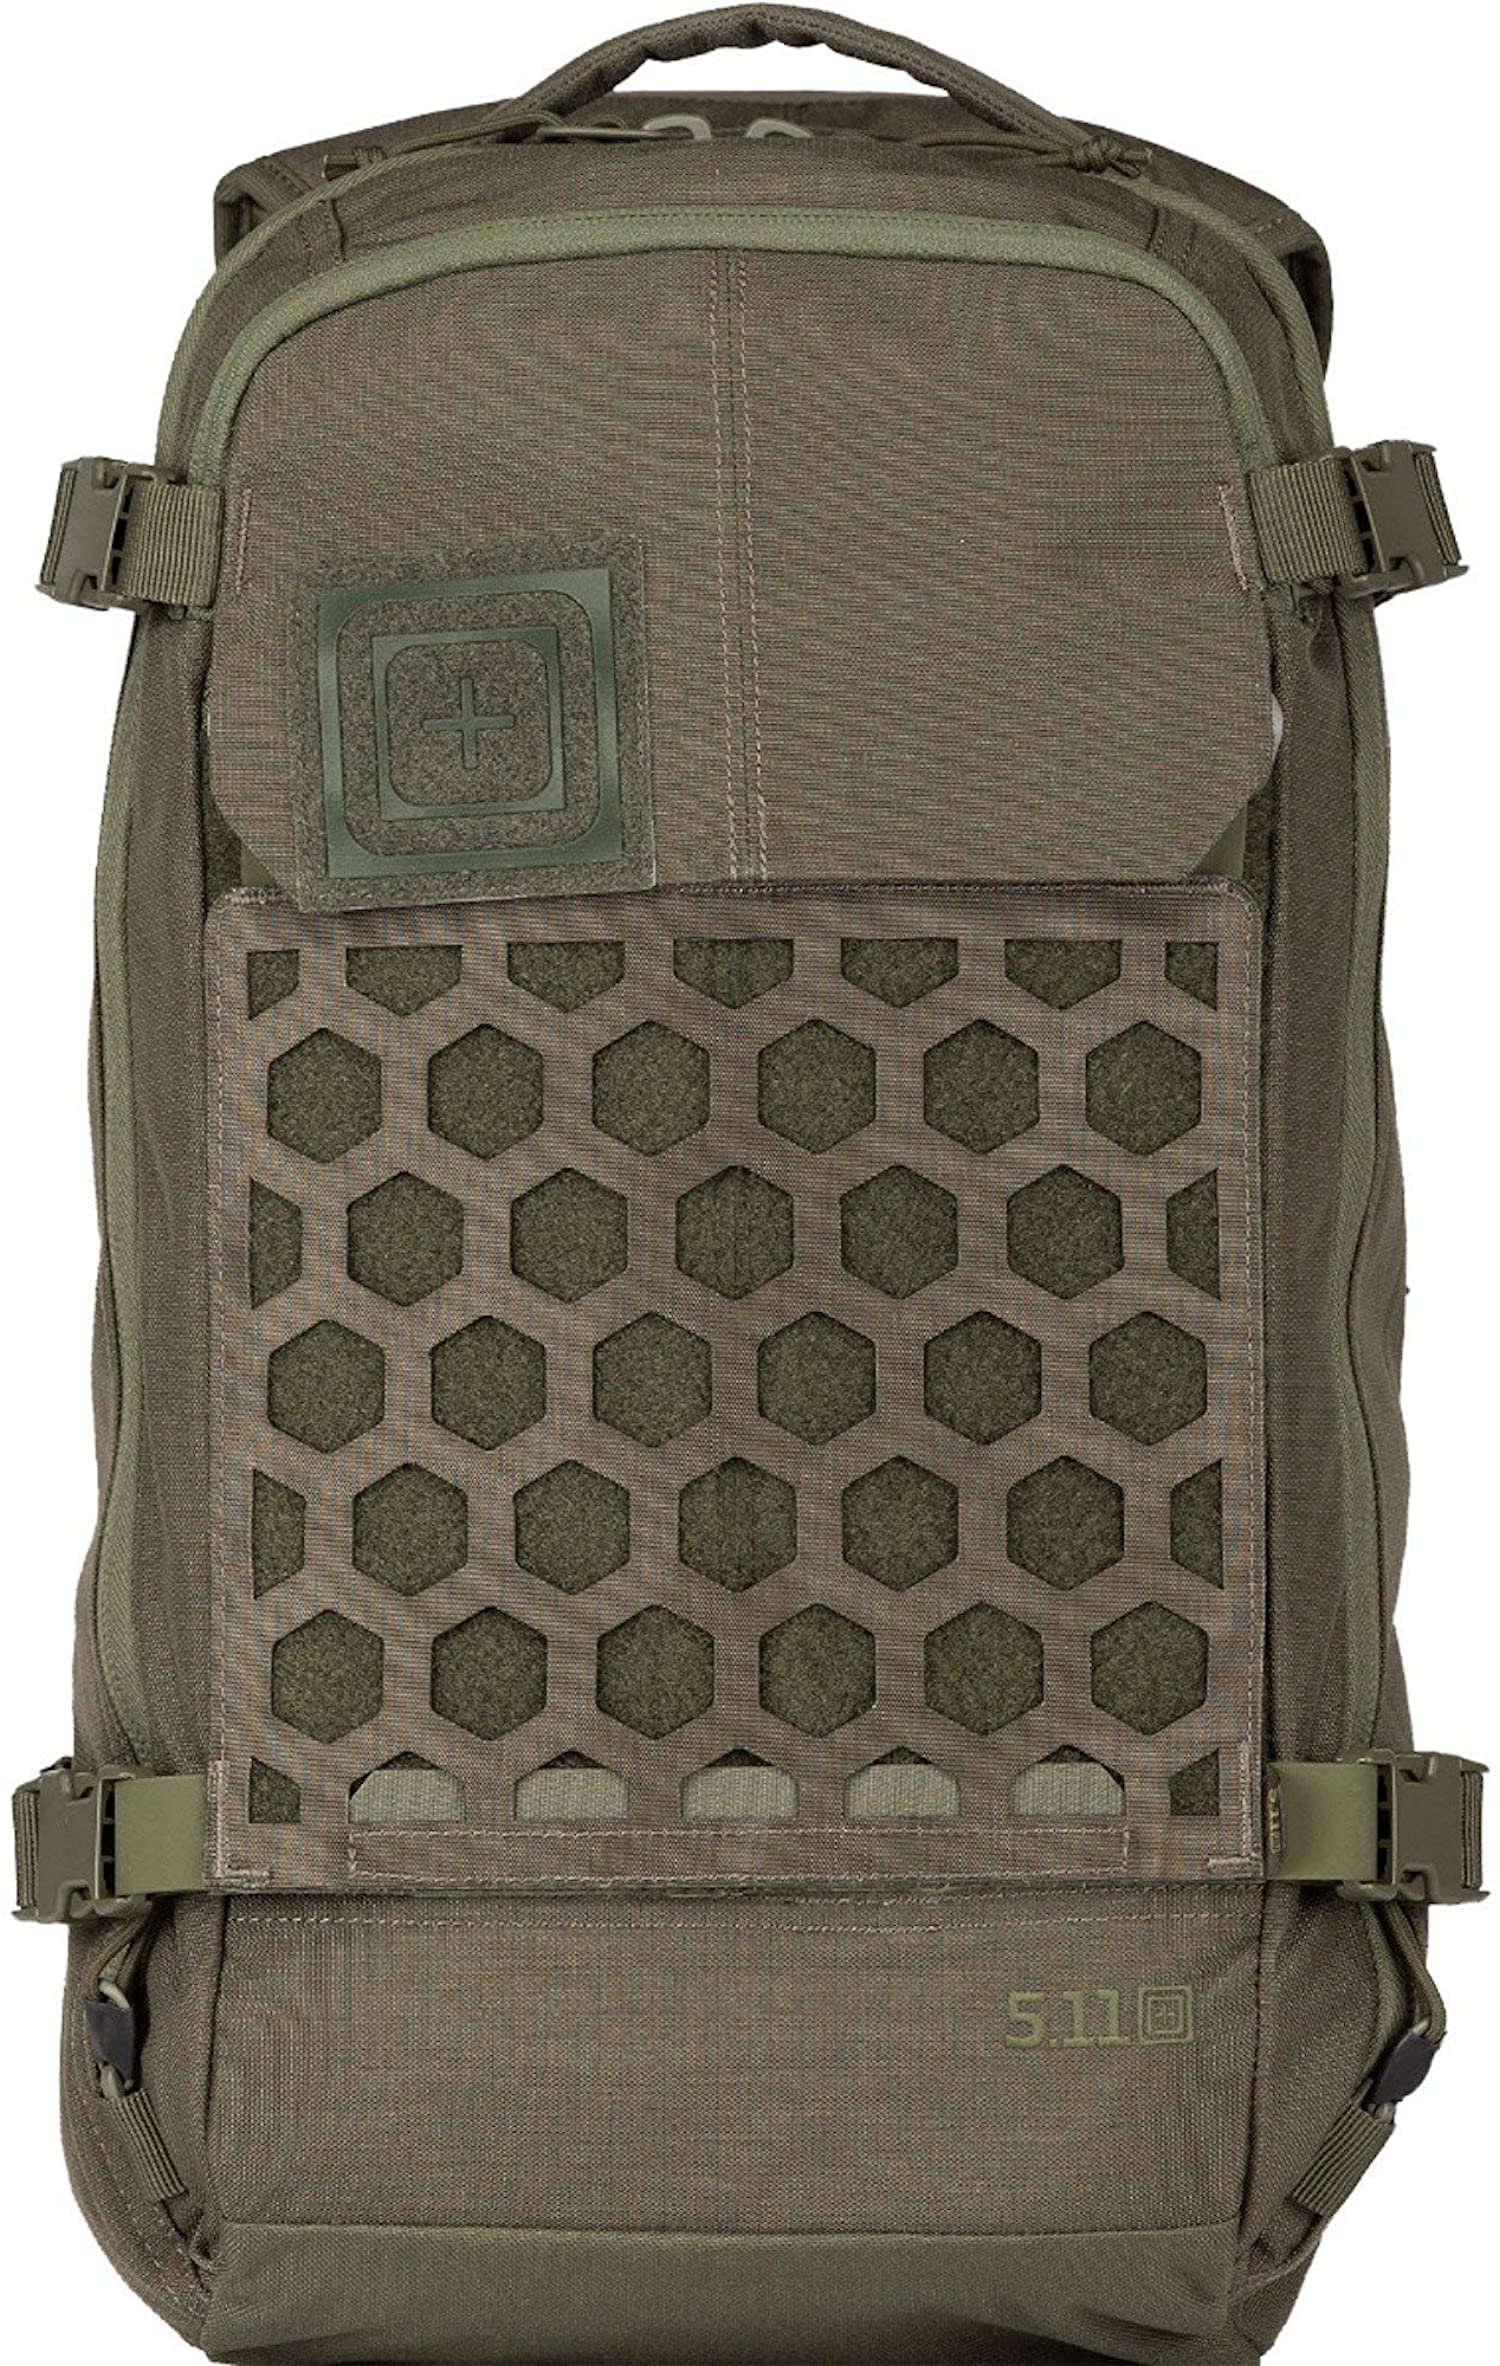 5.11 Tactical AMP12 Essential Backpack, Hexgrid 9x9 Gear Set, 25L 